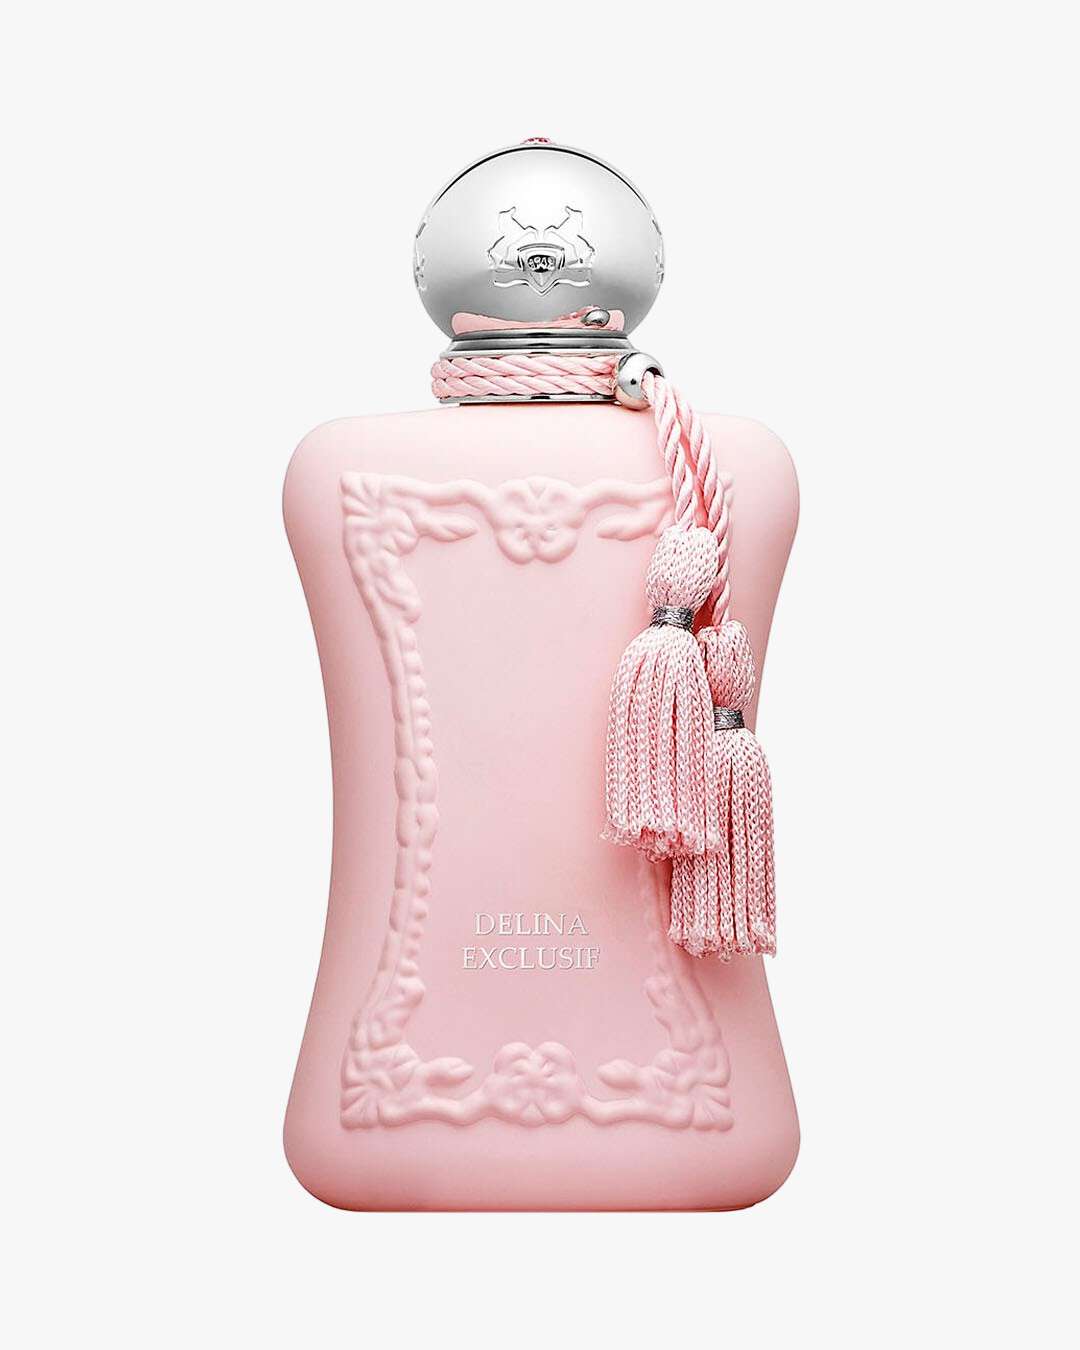 Delina Exclusif Parfum (Størrelse: 75 ML)